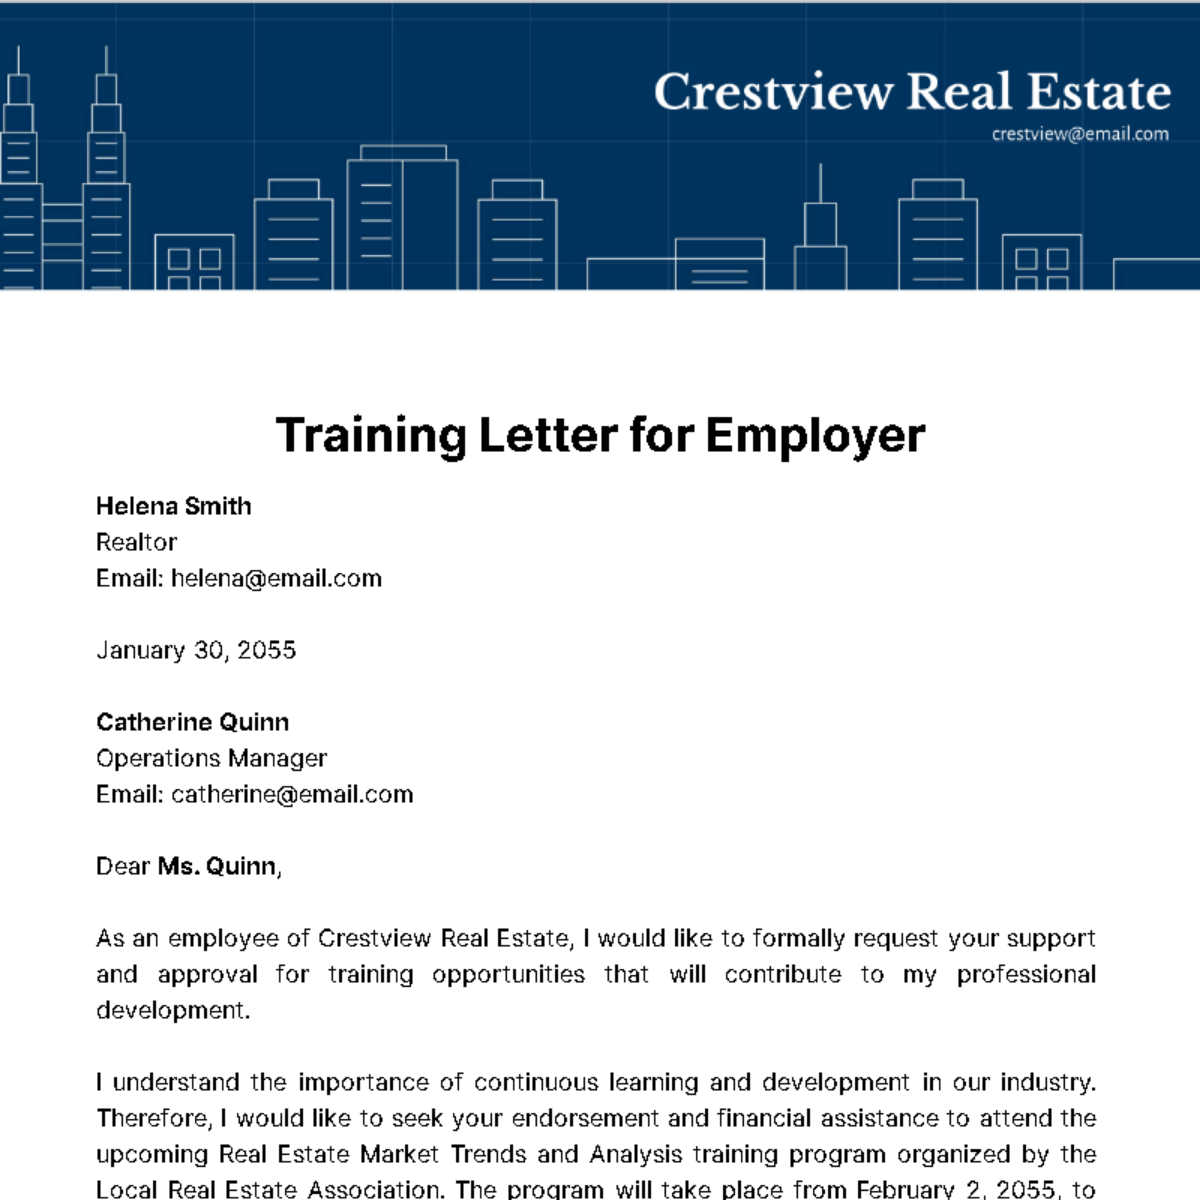 Training Letter for Employer Template